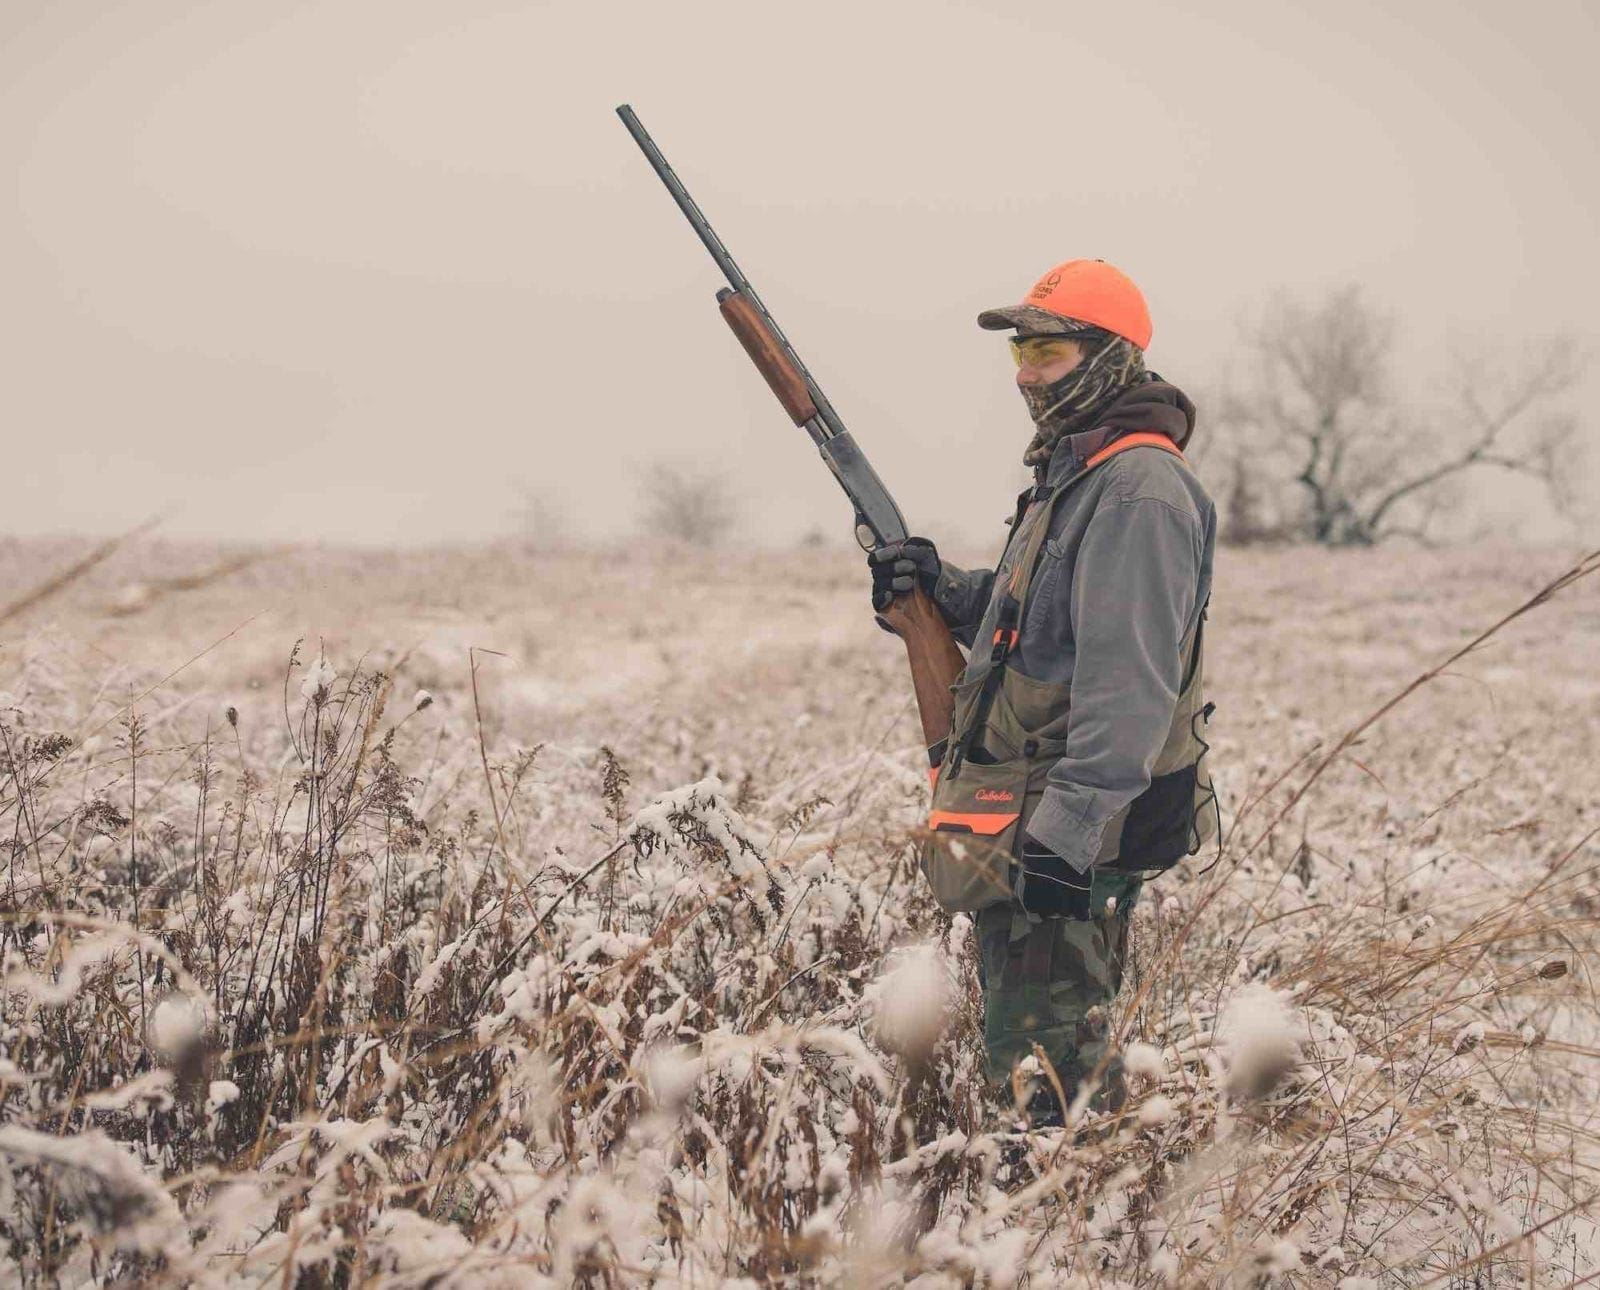 A pheasant hunter in a snowy field